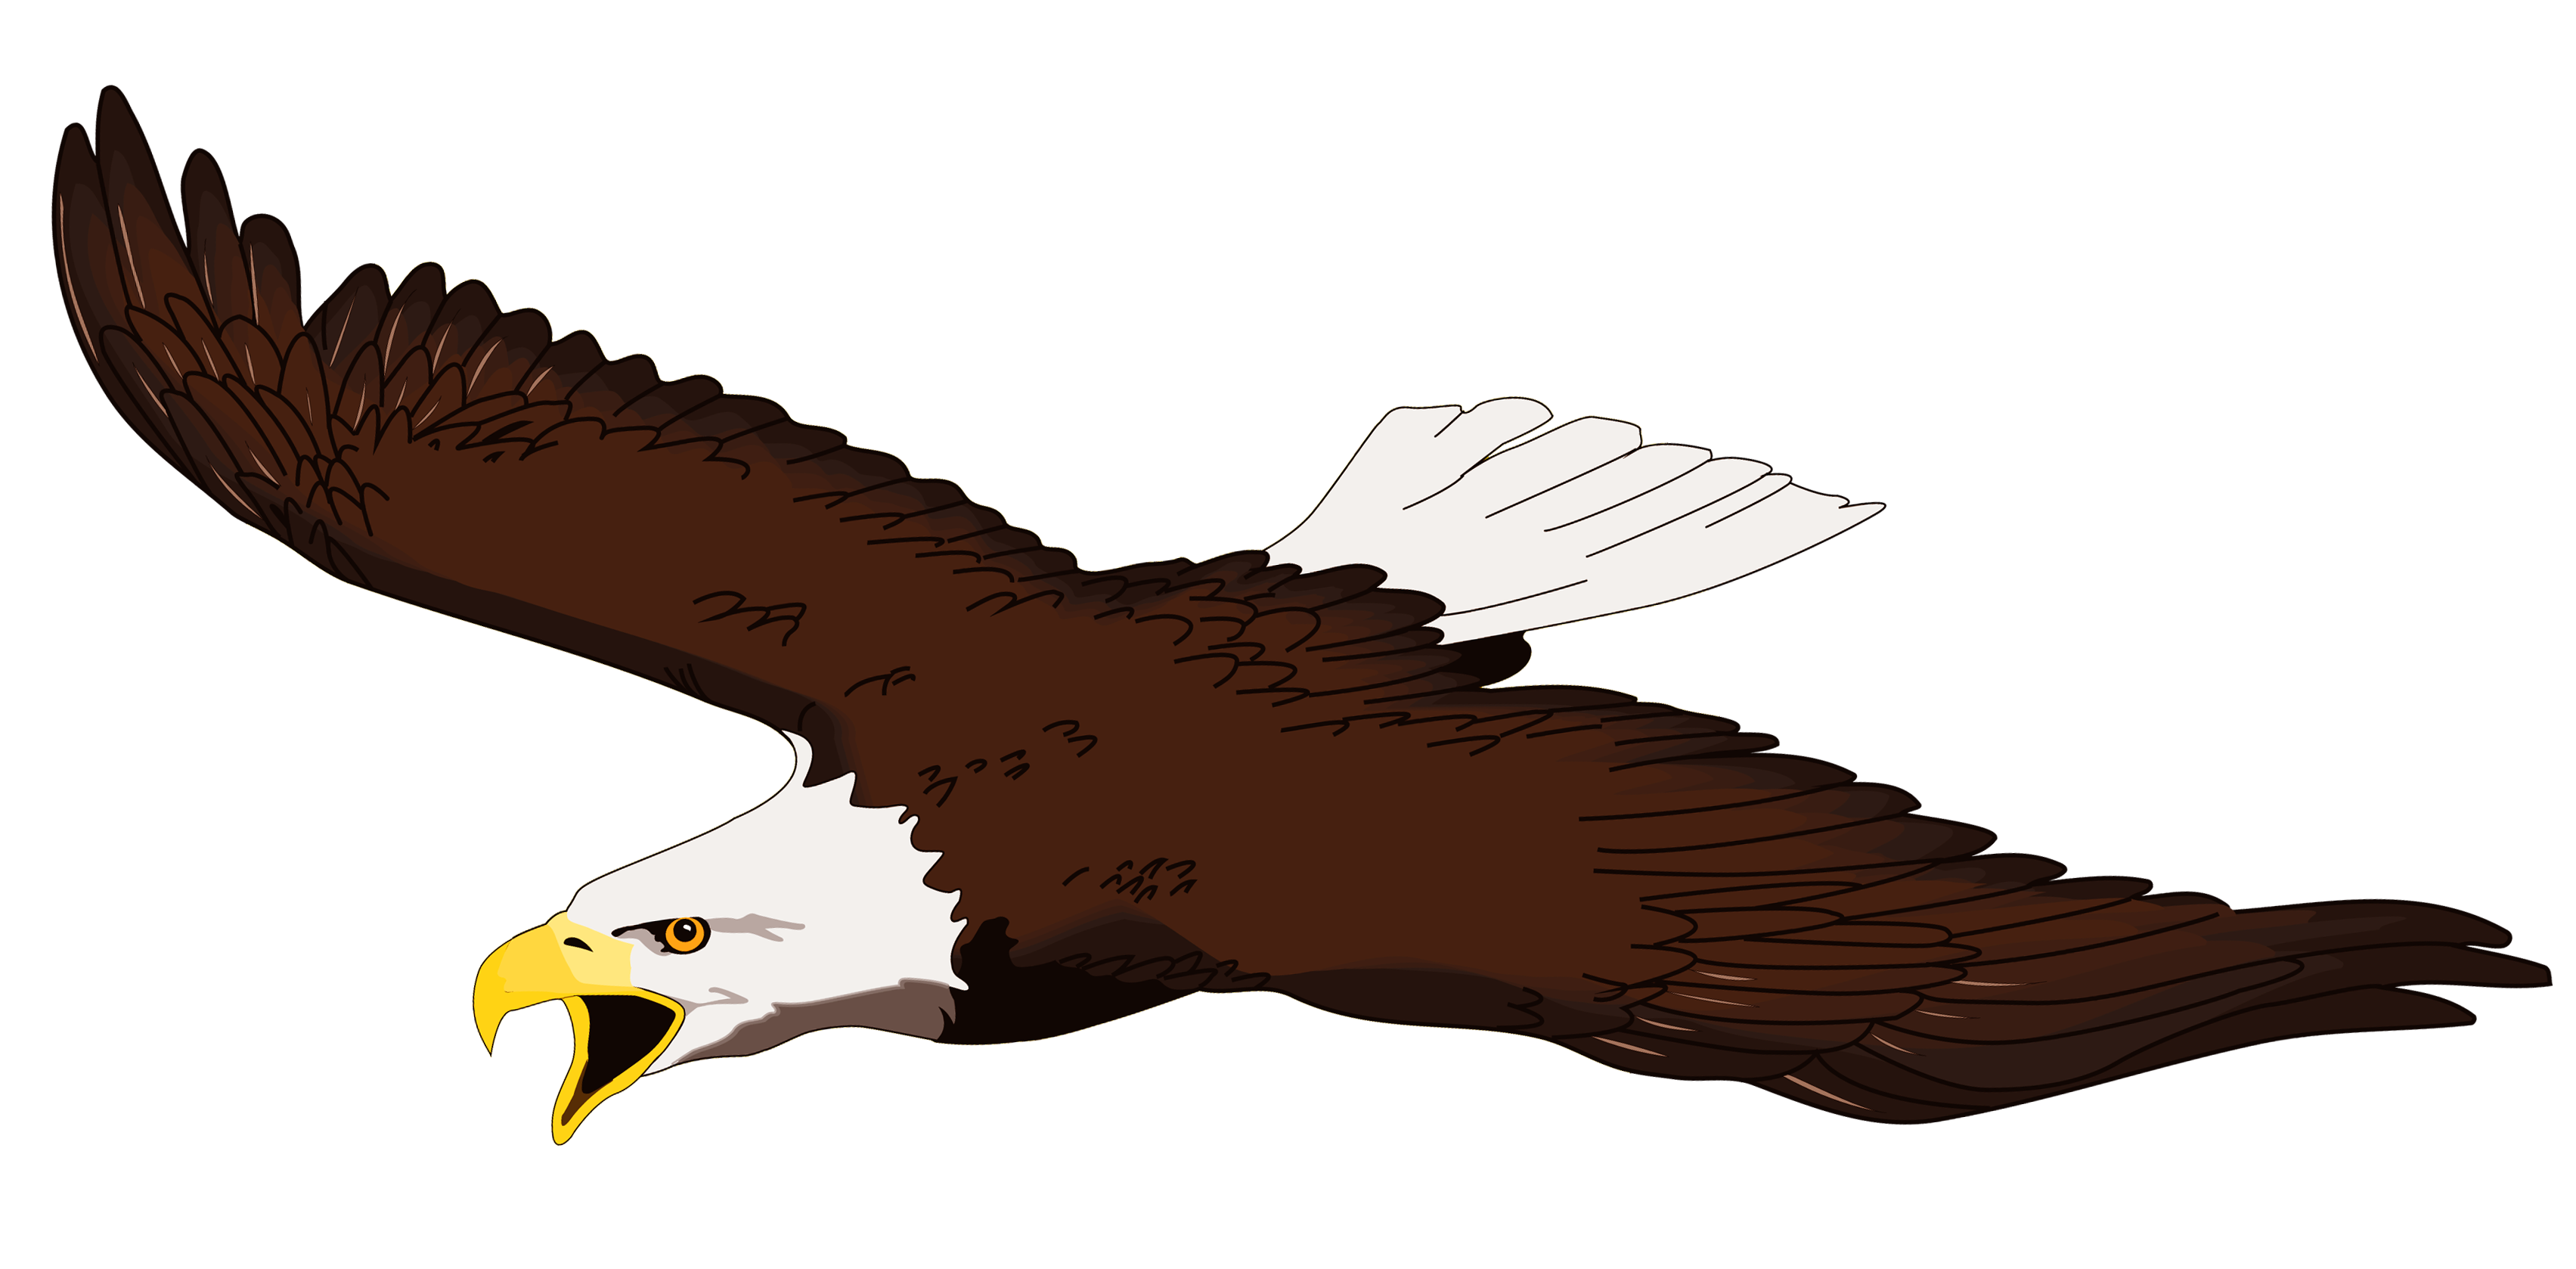 Flying bald eagle clipart